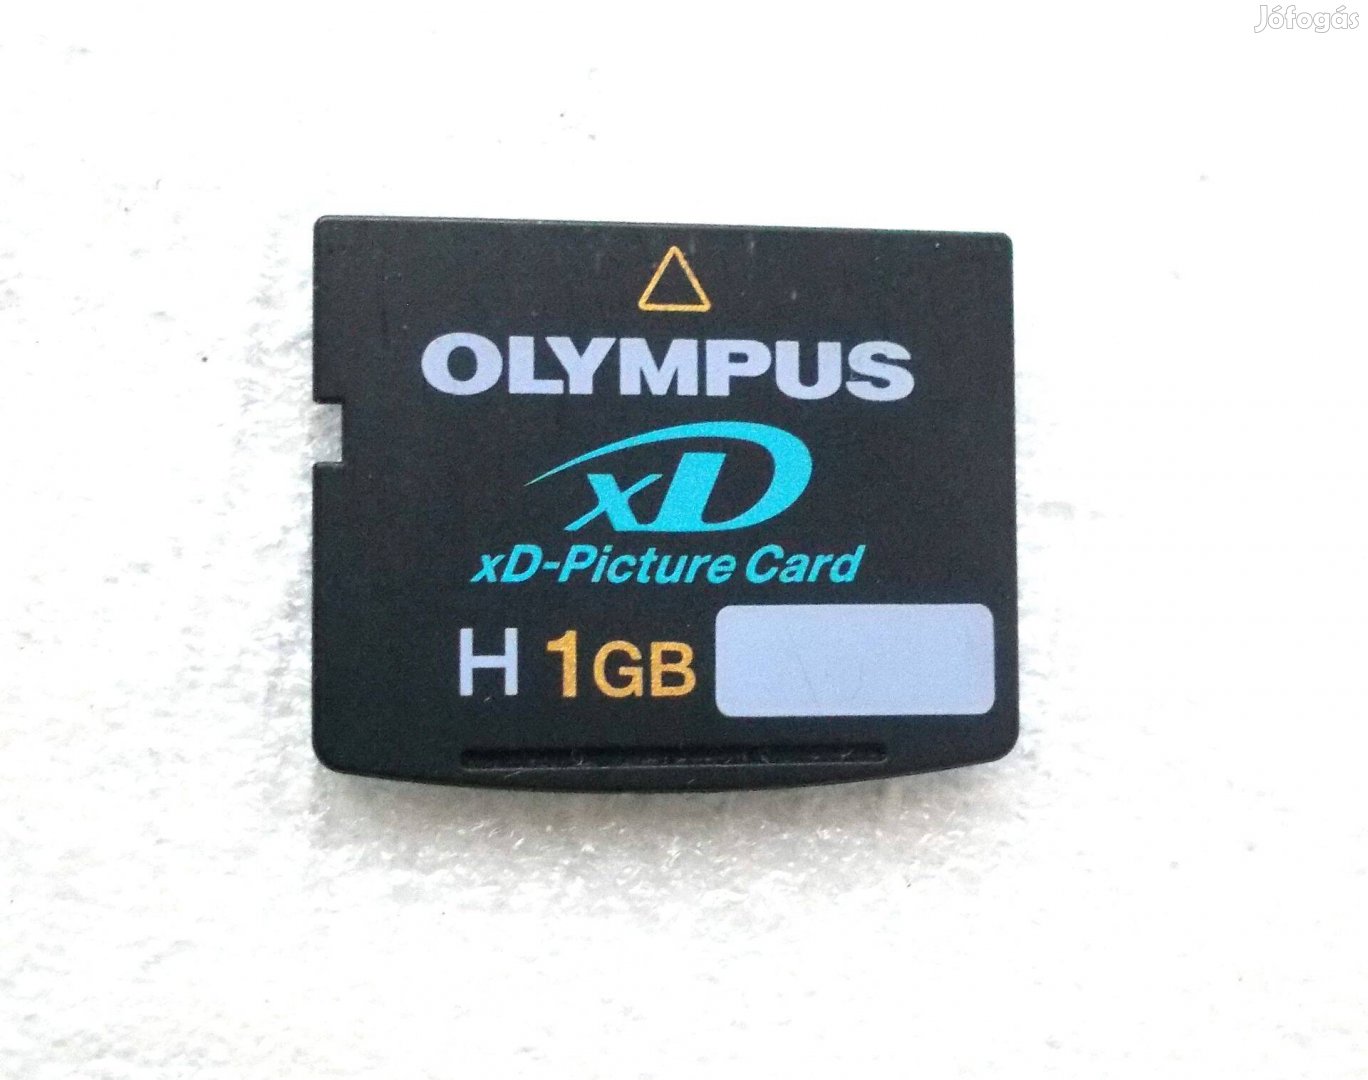 Olympus XD-Pjcture Card H 1GB Memóriakártya (Tesztelt)